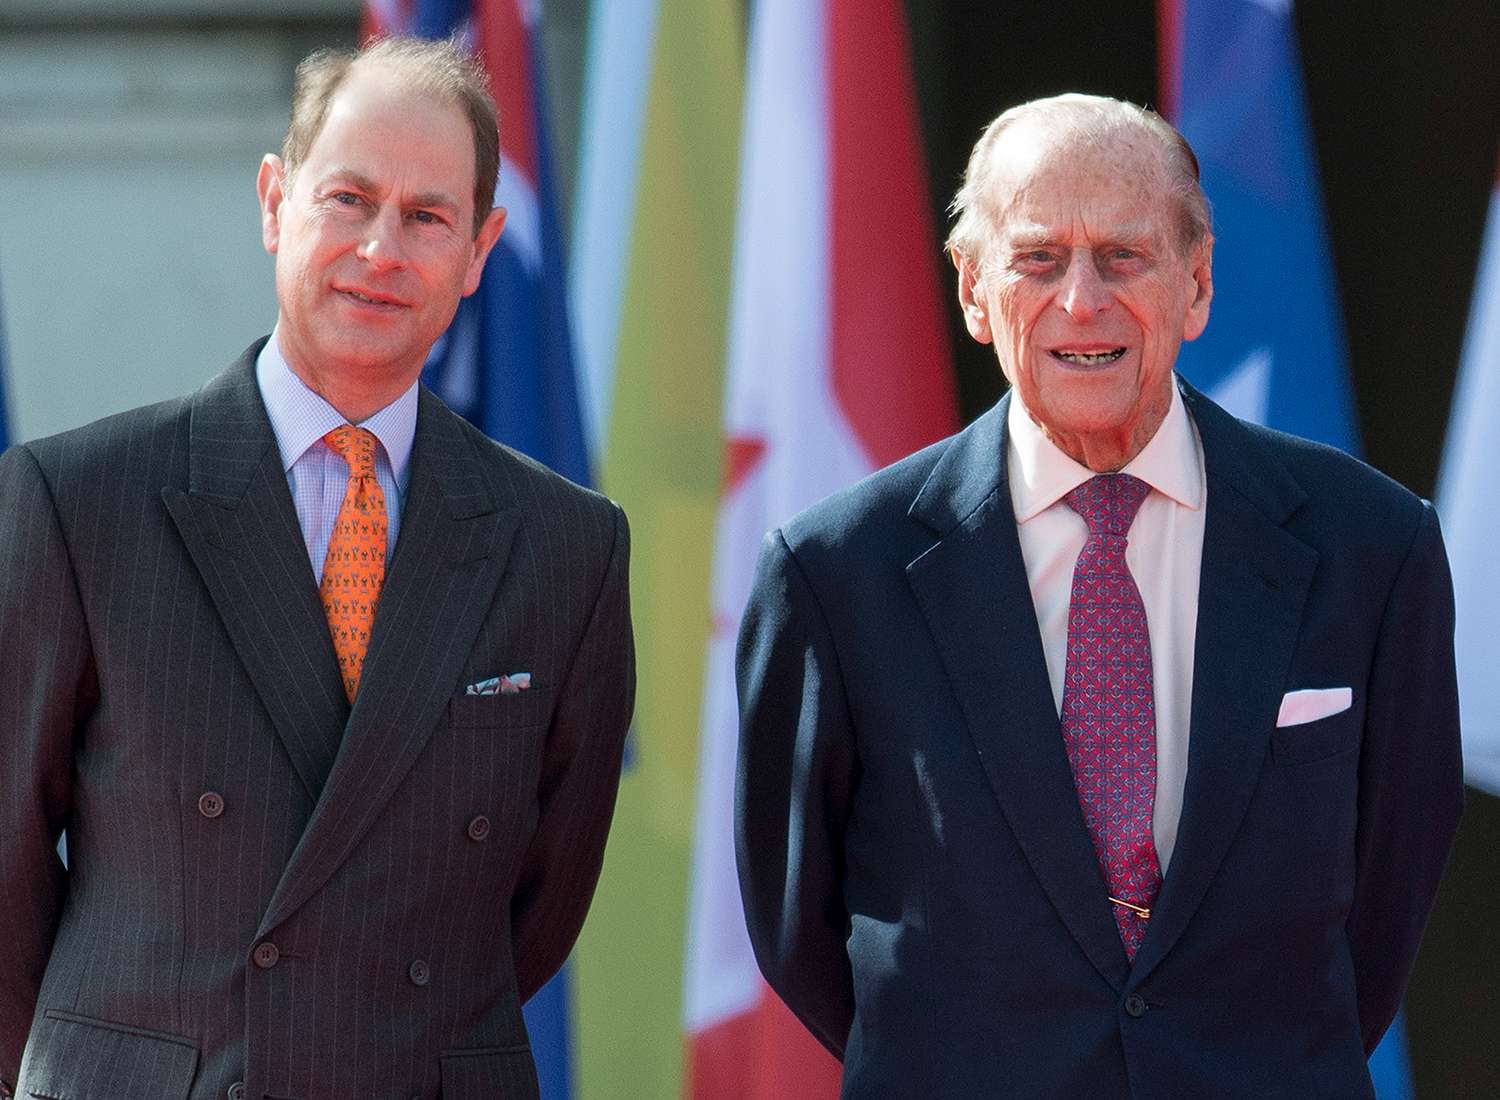 Prince Philip, Duke of Edinburgh and Prince Edward, Earl of Wessex